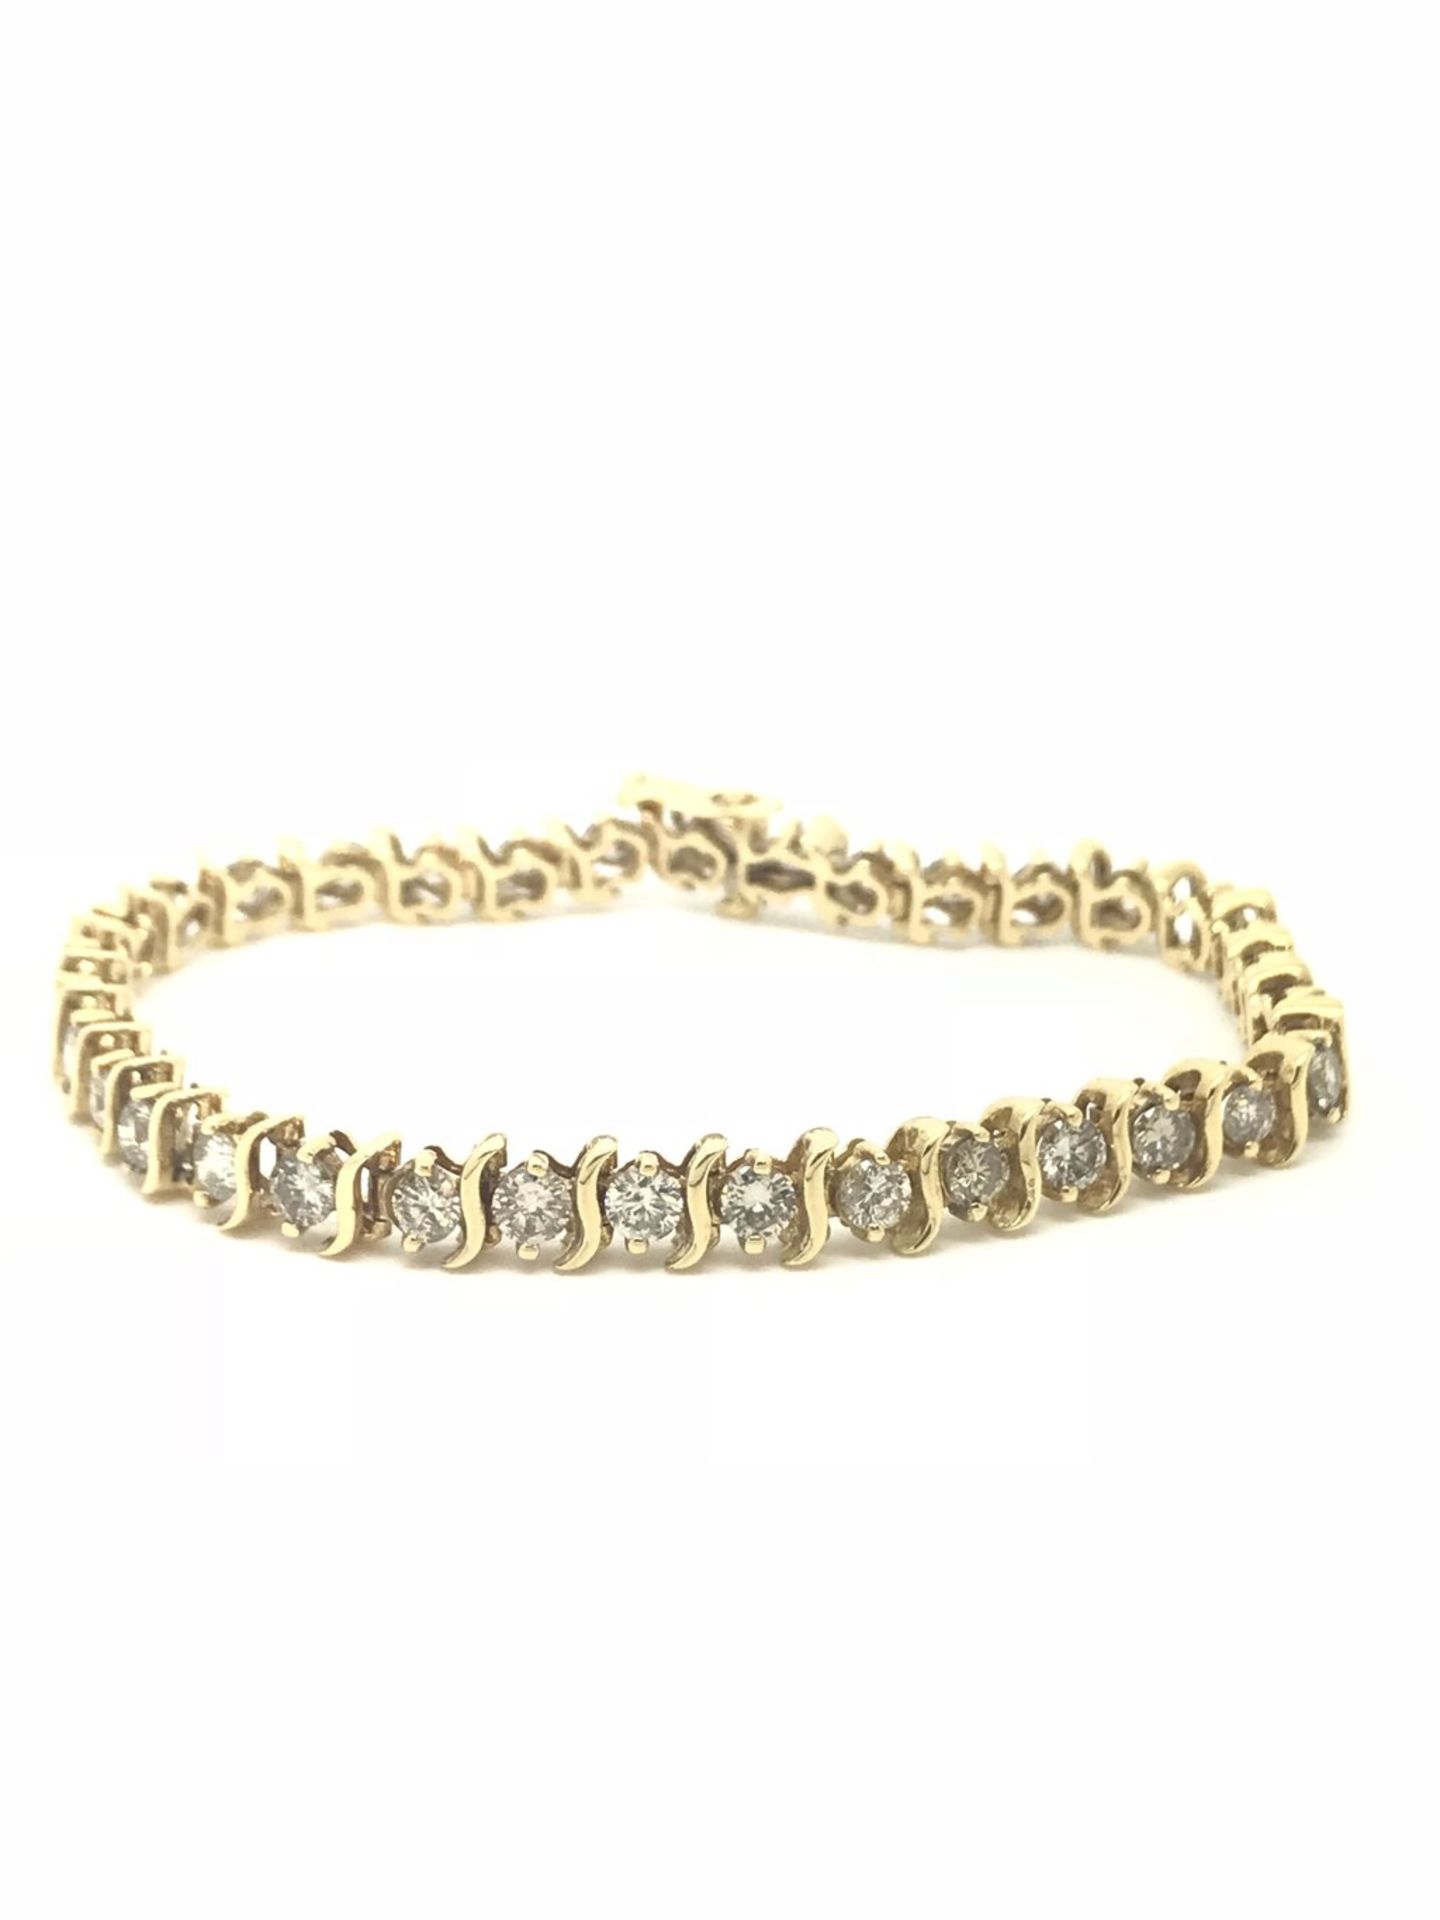 5.10ct Diamond Tennis Bracelet, 18ct Yellow Gold